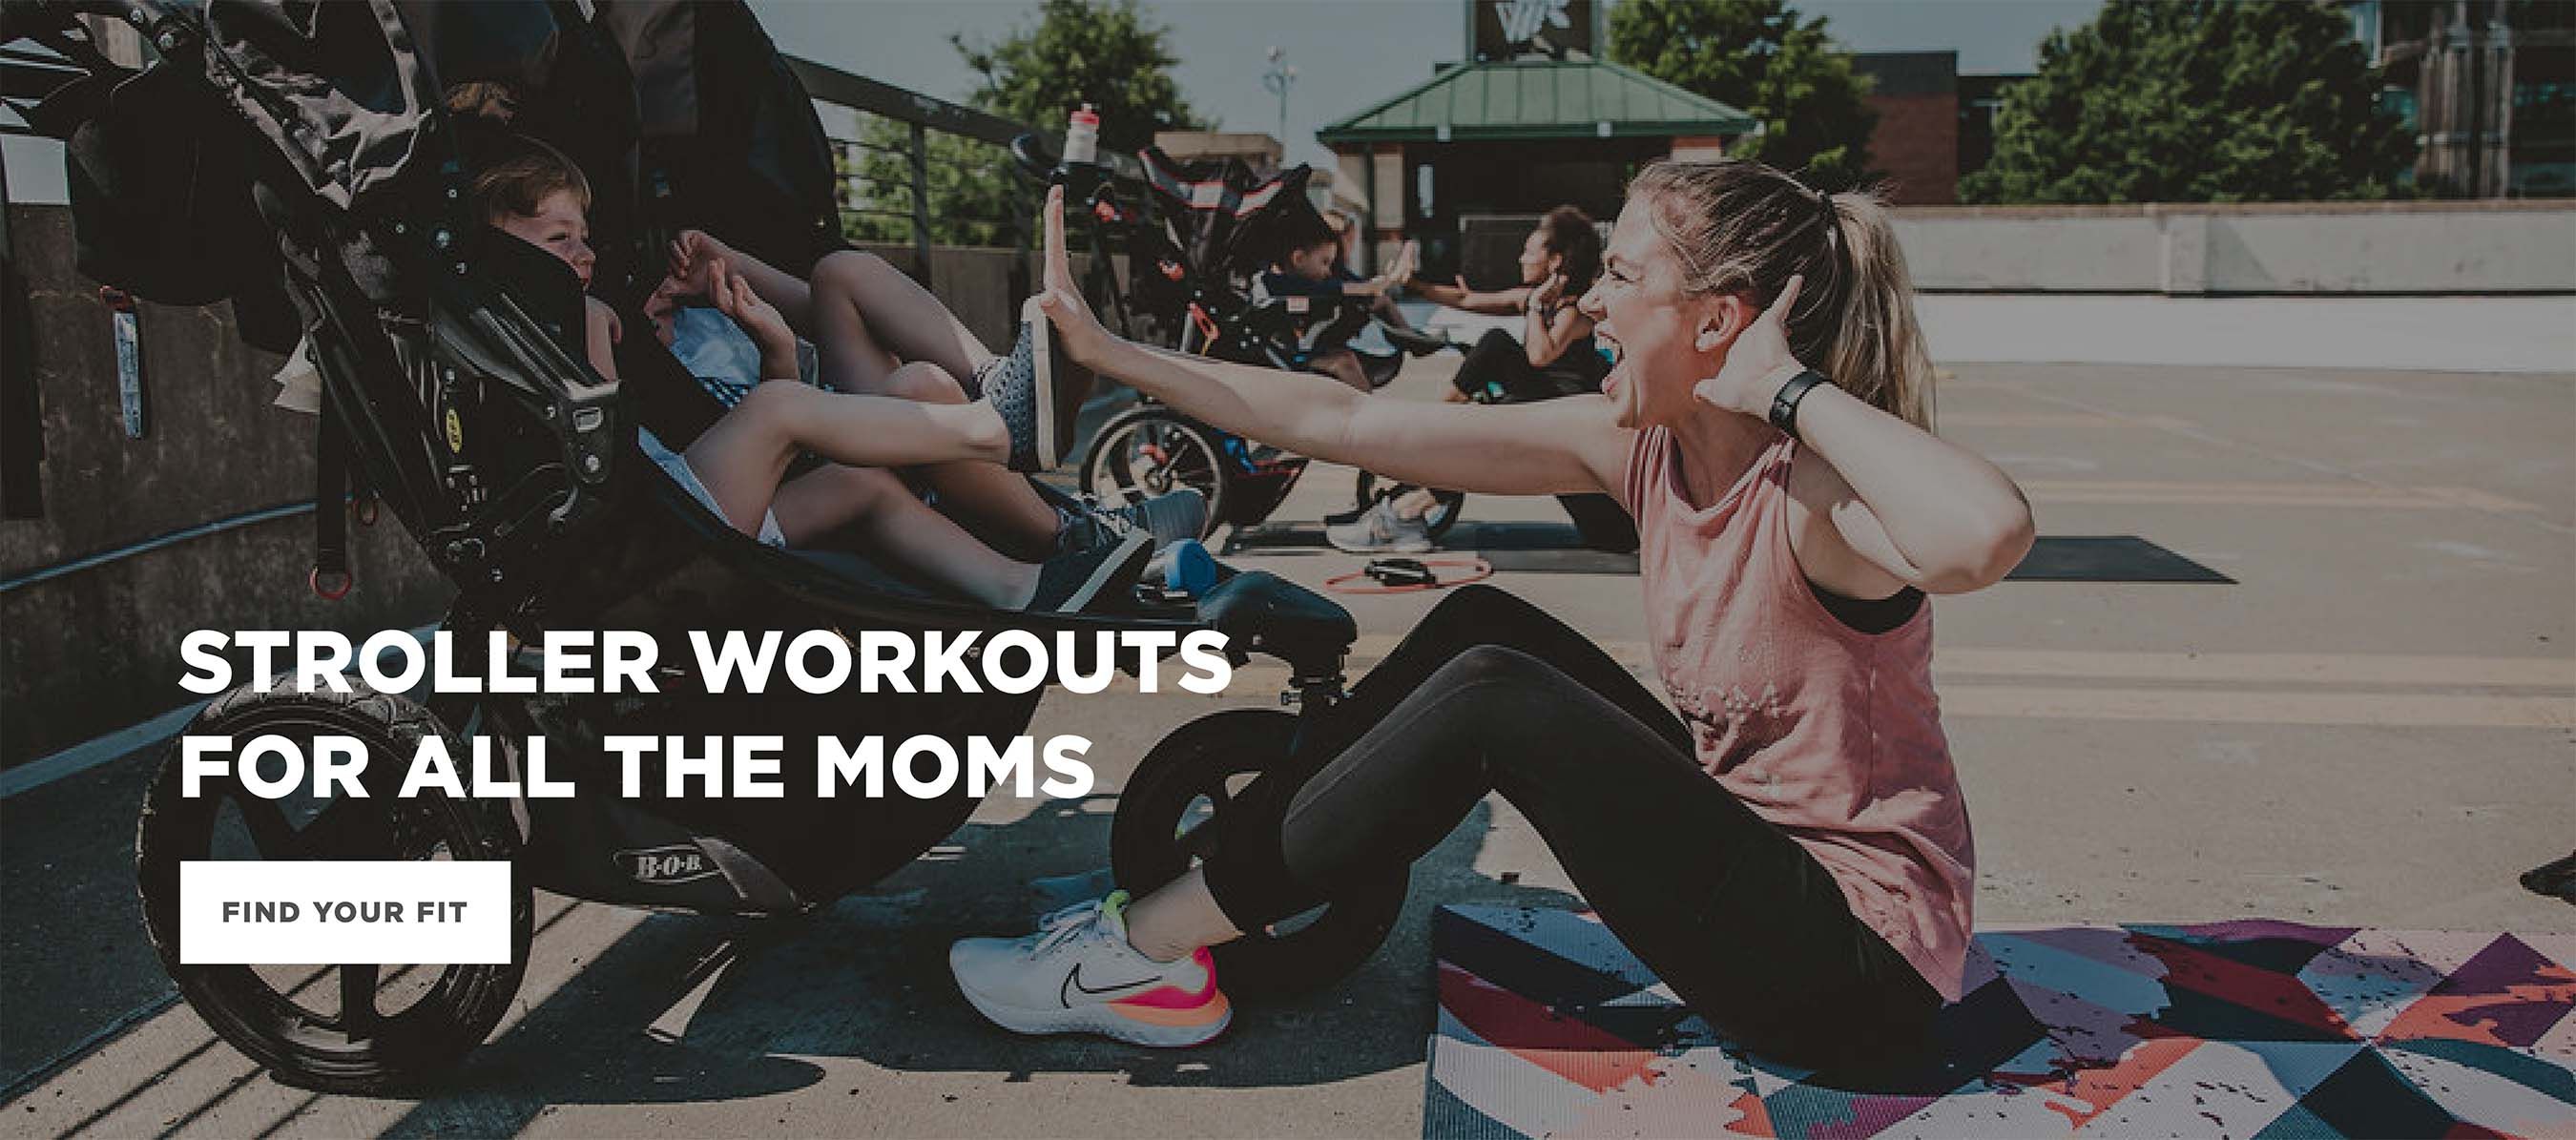 Stroller Workouts for Moms